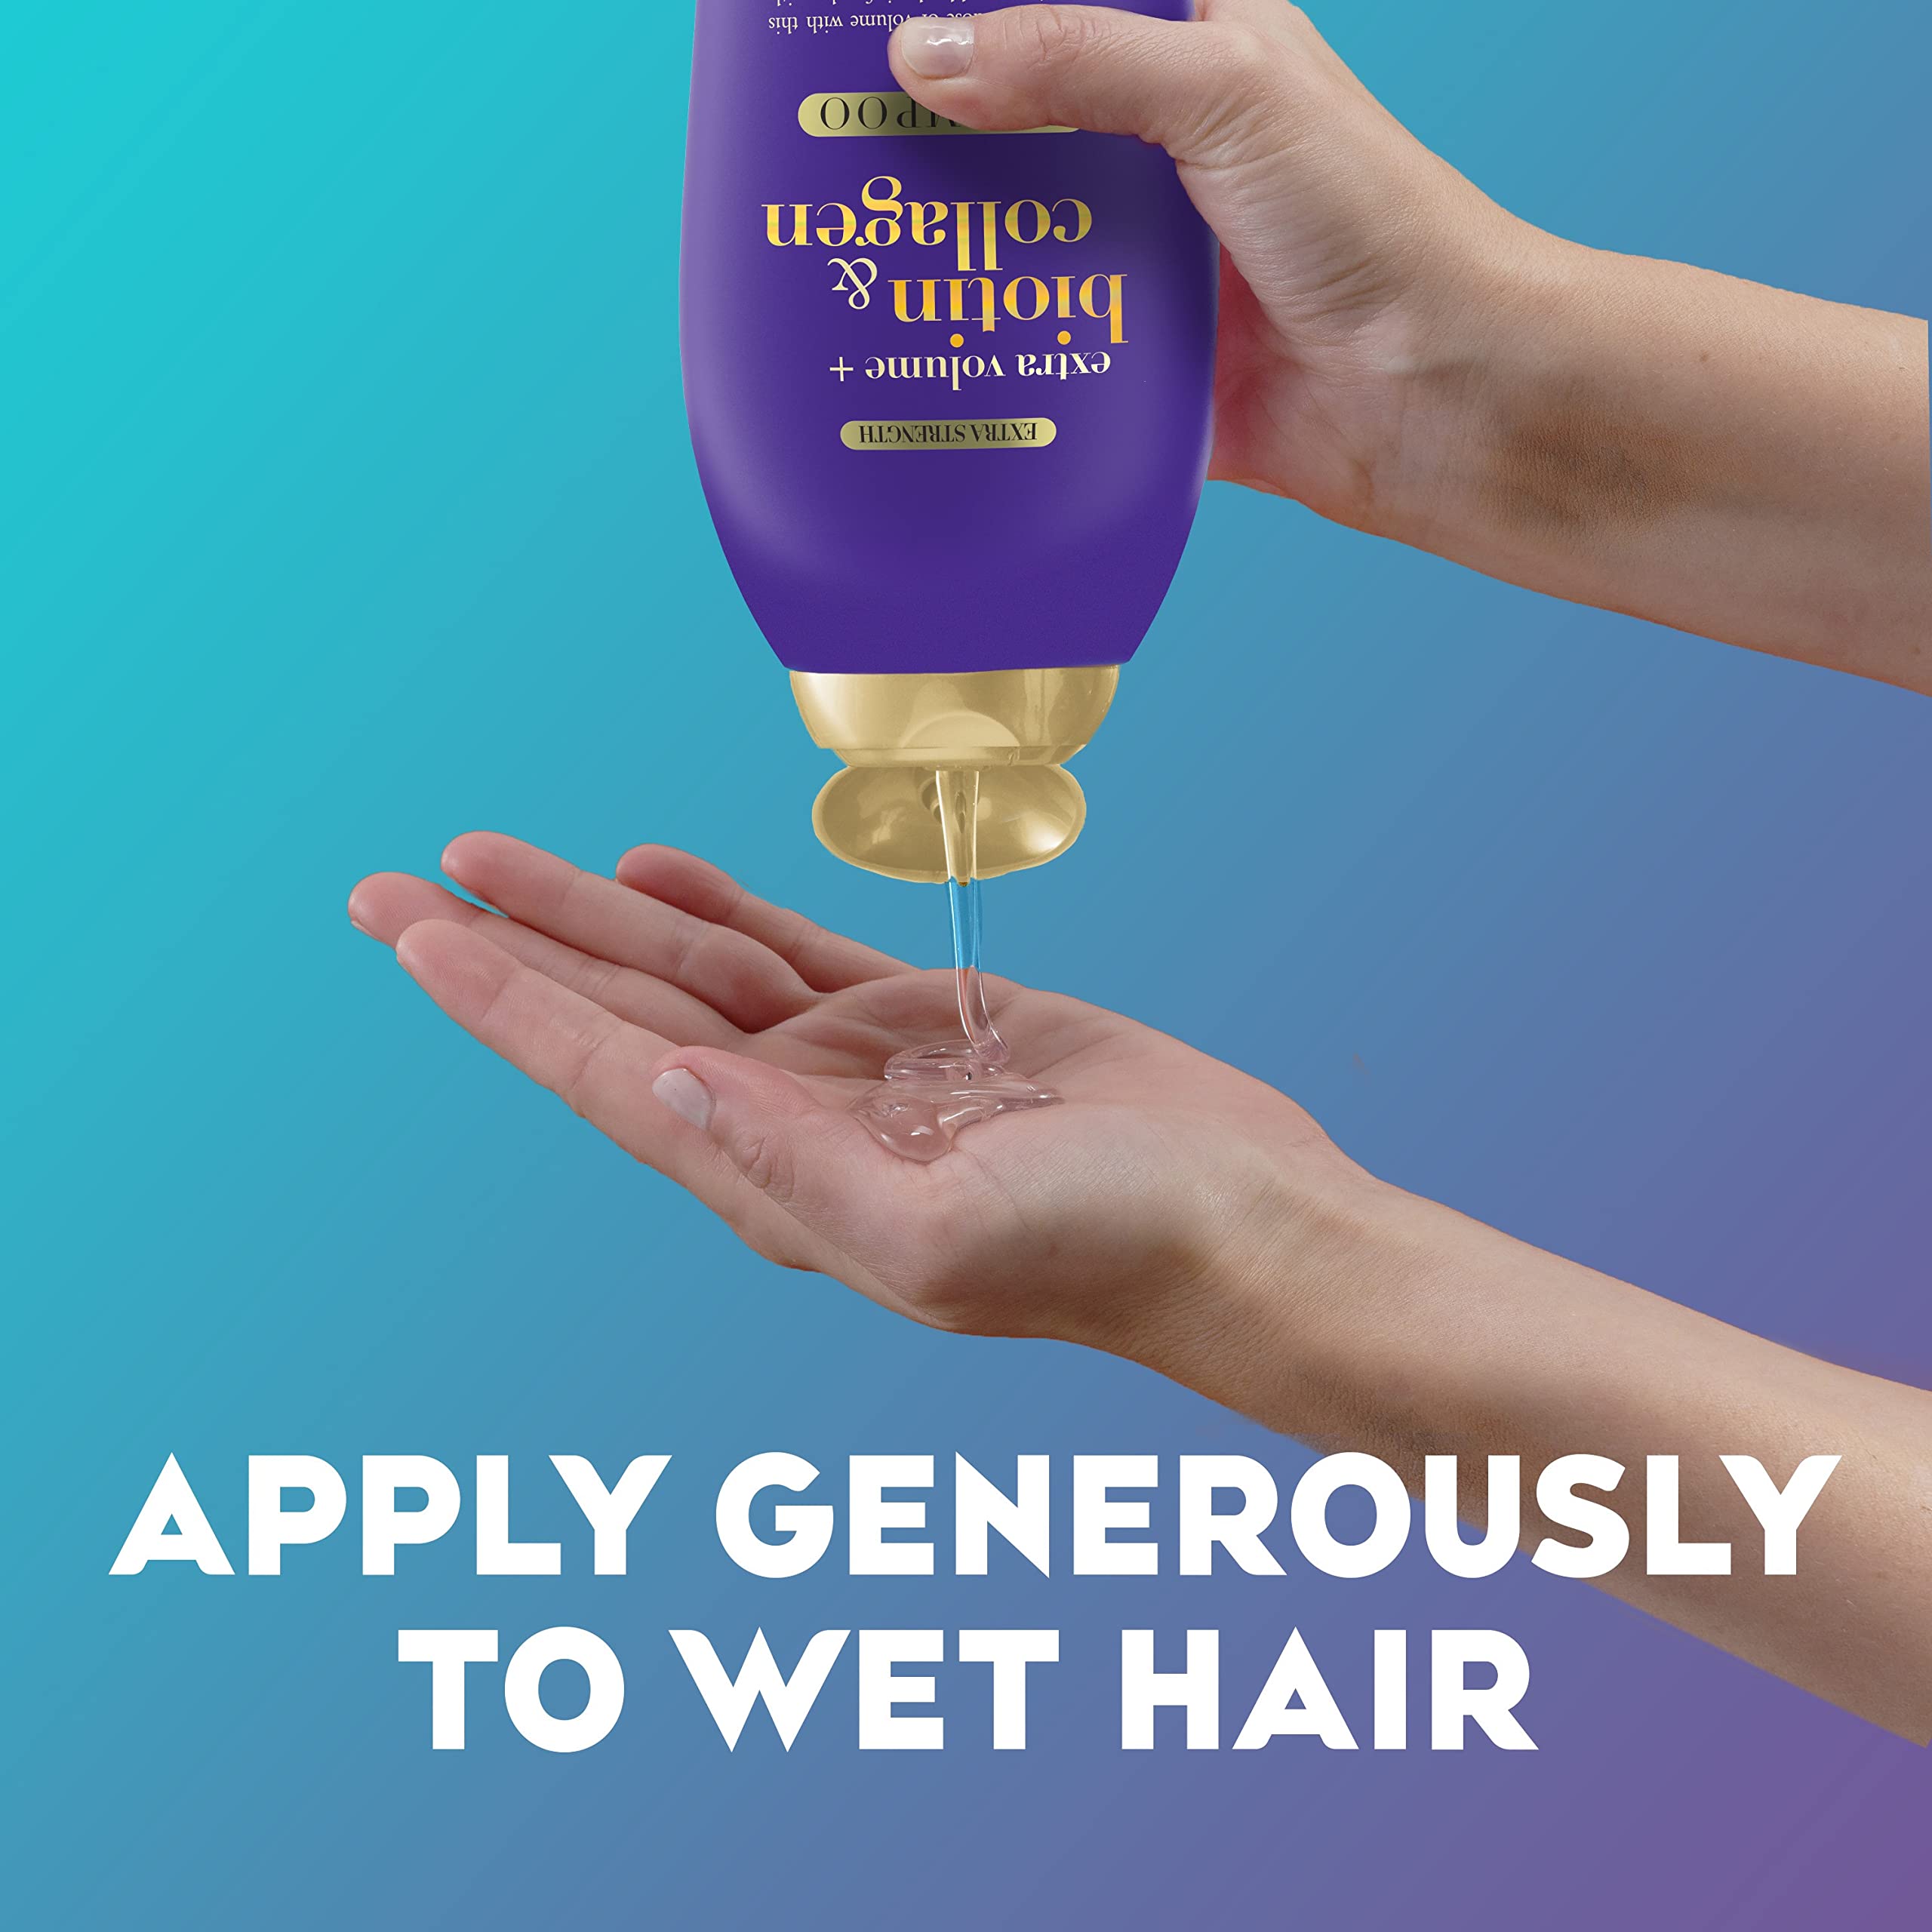 OGX Biotin & Collagen Extra Strength Volumizing Shampoo for Thicker, Fuller Hair, 25.4 fl oz